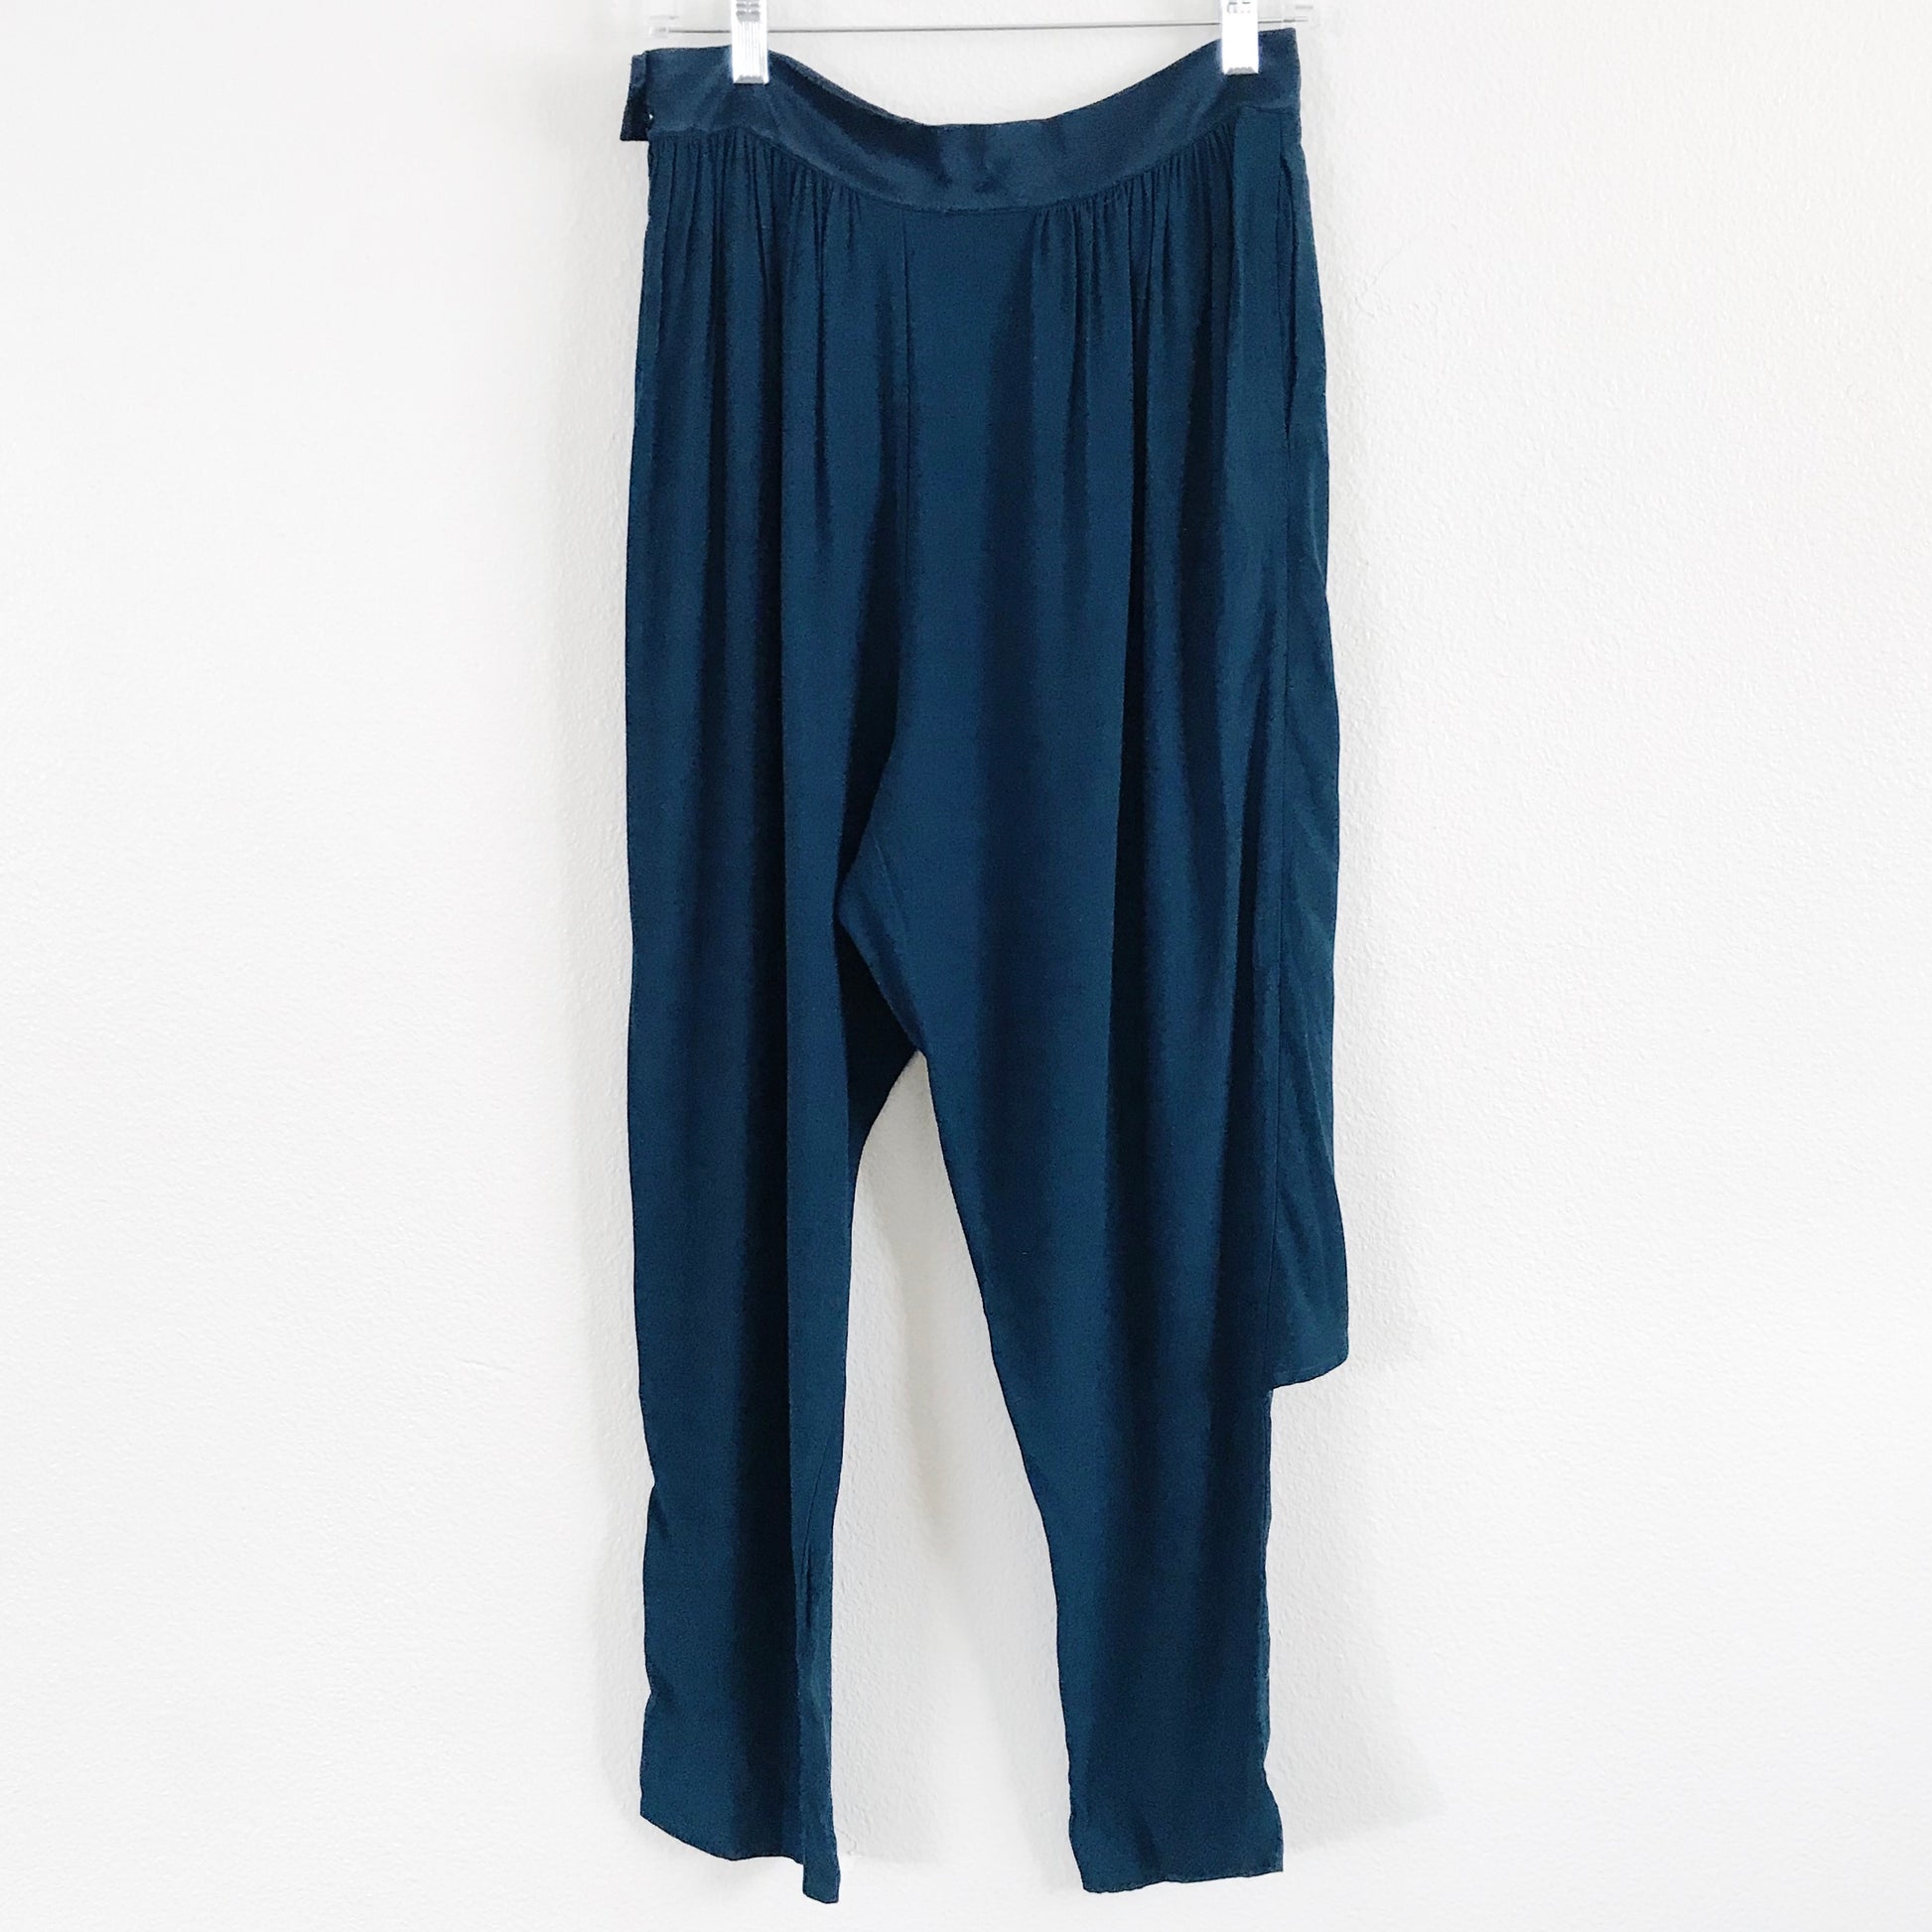 Prelovely | Anthropologie Blue Drop Crotch Overlay Harem Pants